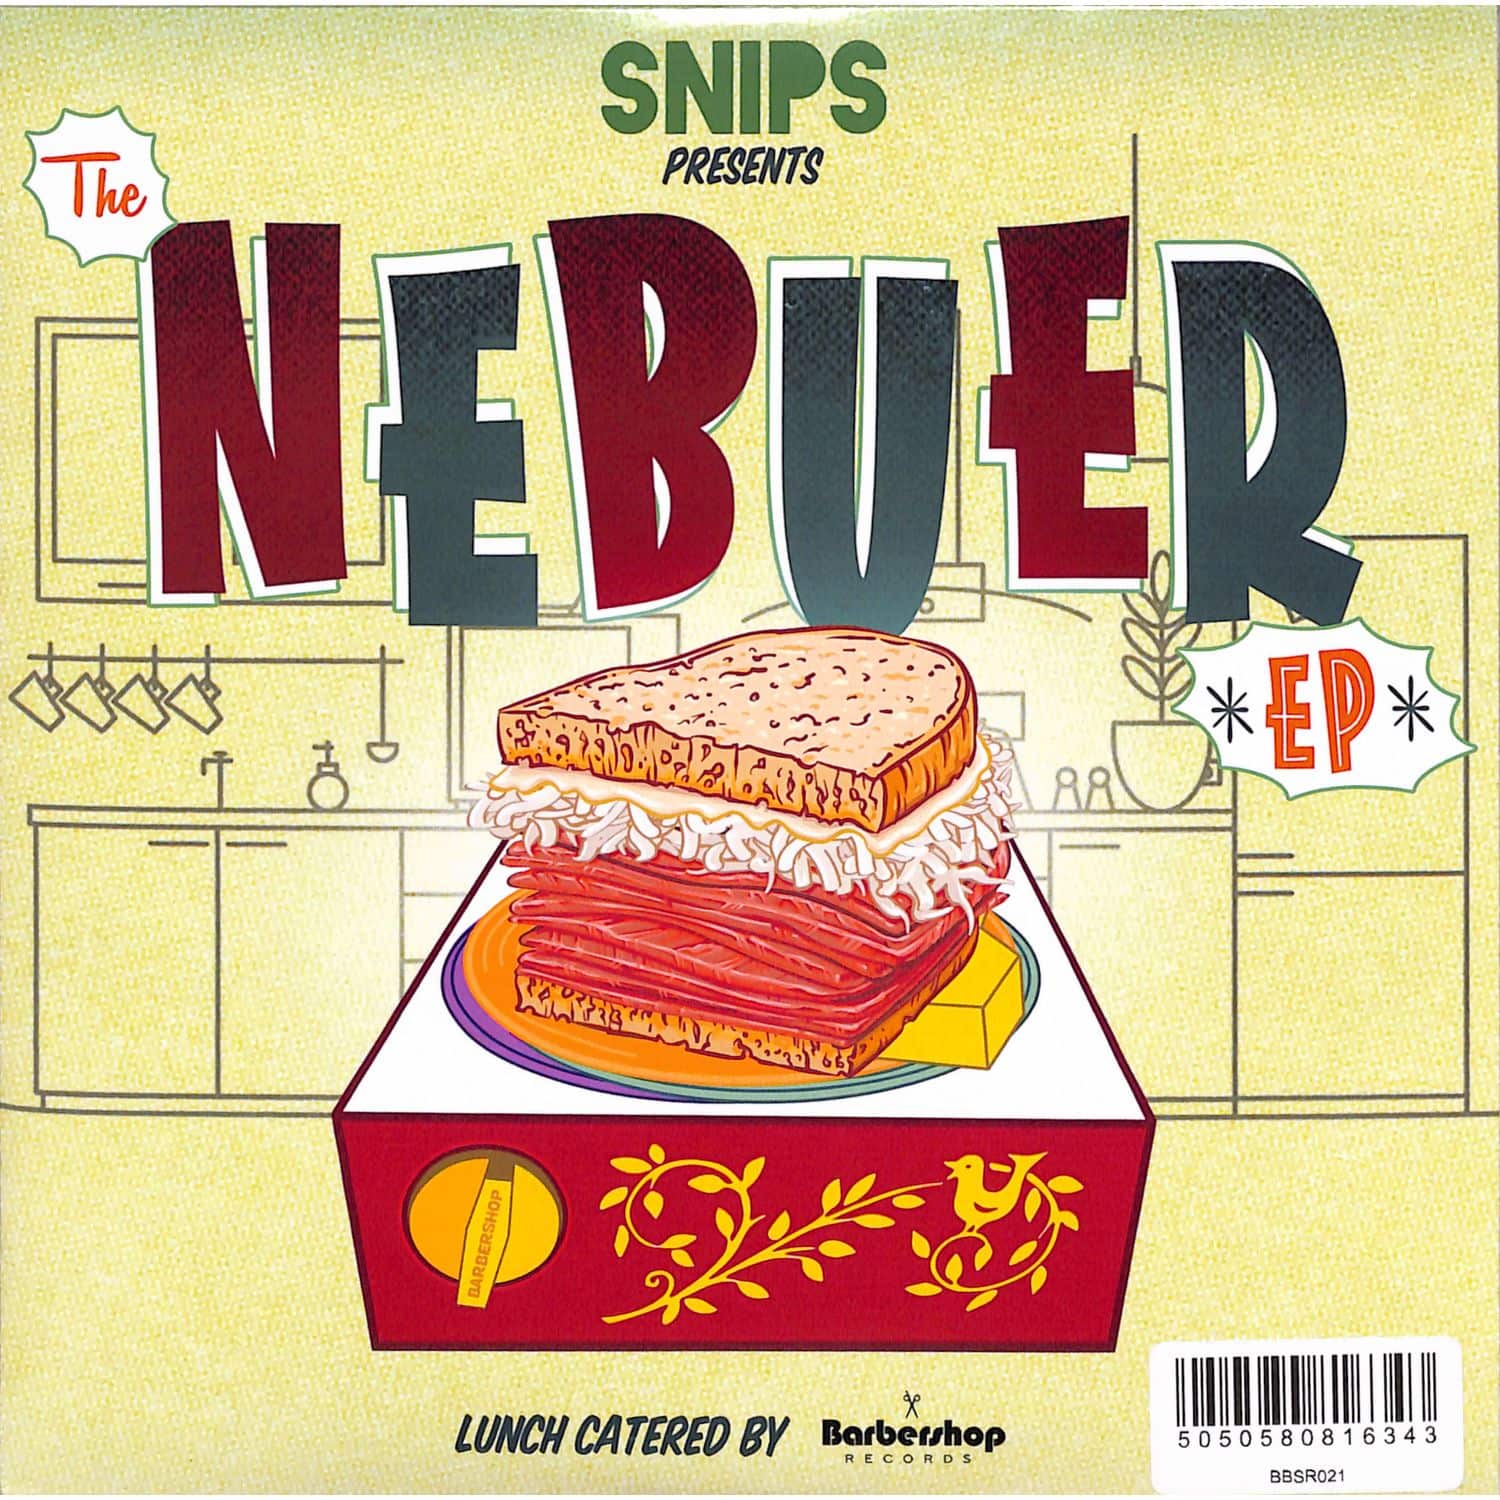 Snips - NEBUER EP 